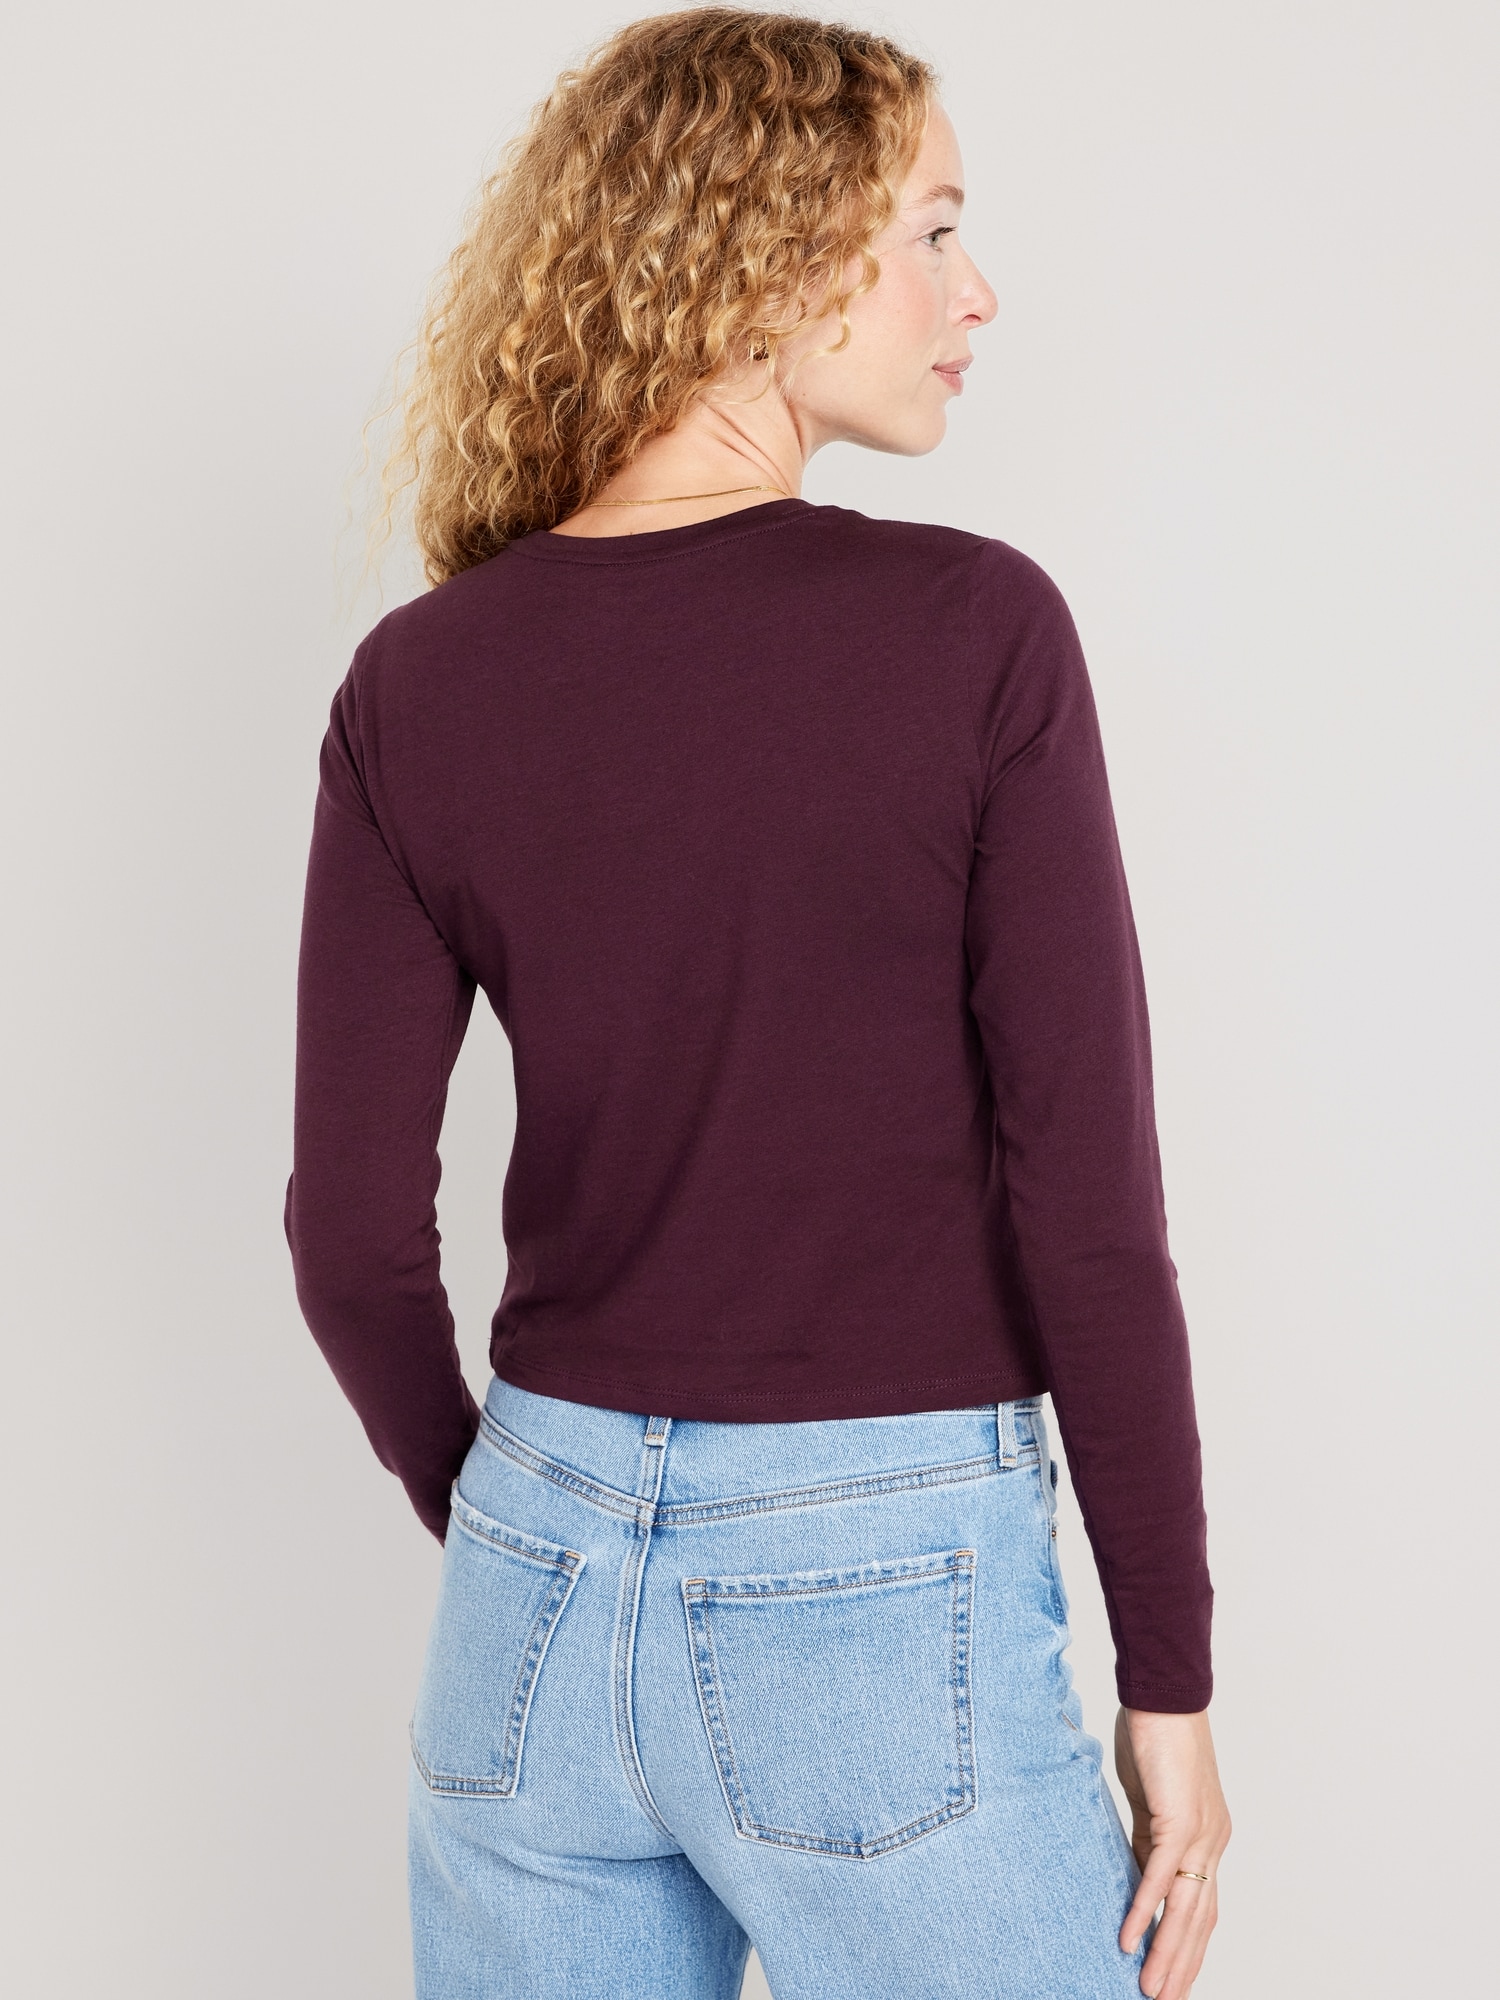 Entyinea Womens Tops Dressy Casual Basic Solid Soft Cotton Long Sleeve Neck  Top Shirts Purple XL 